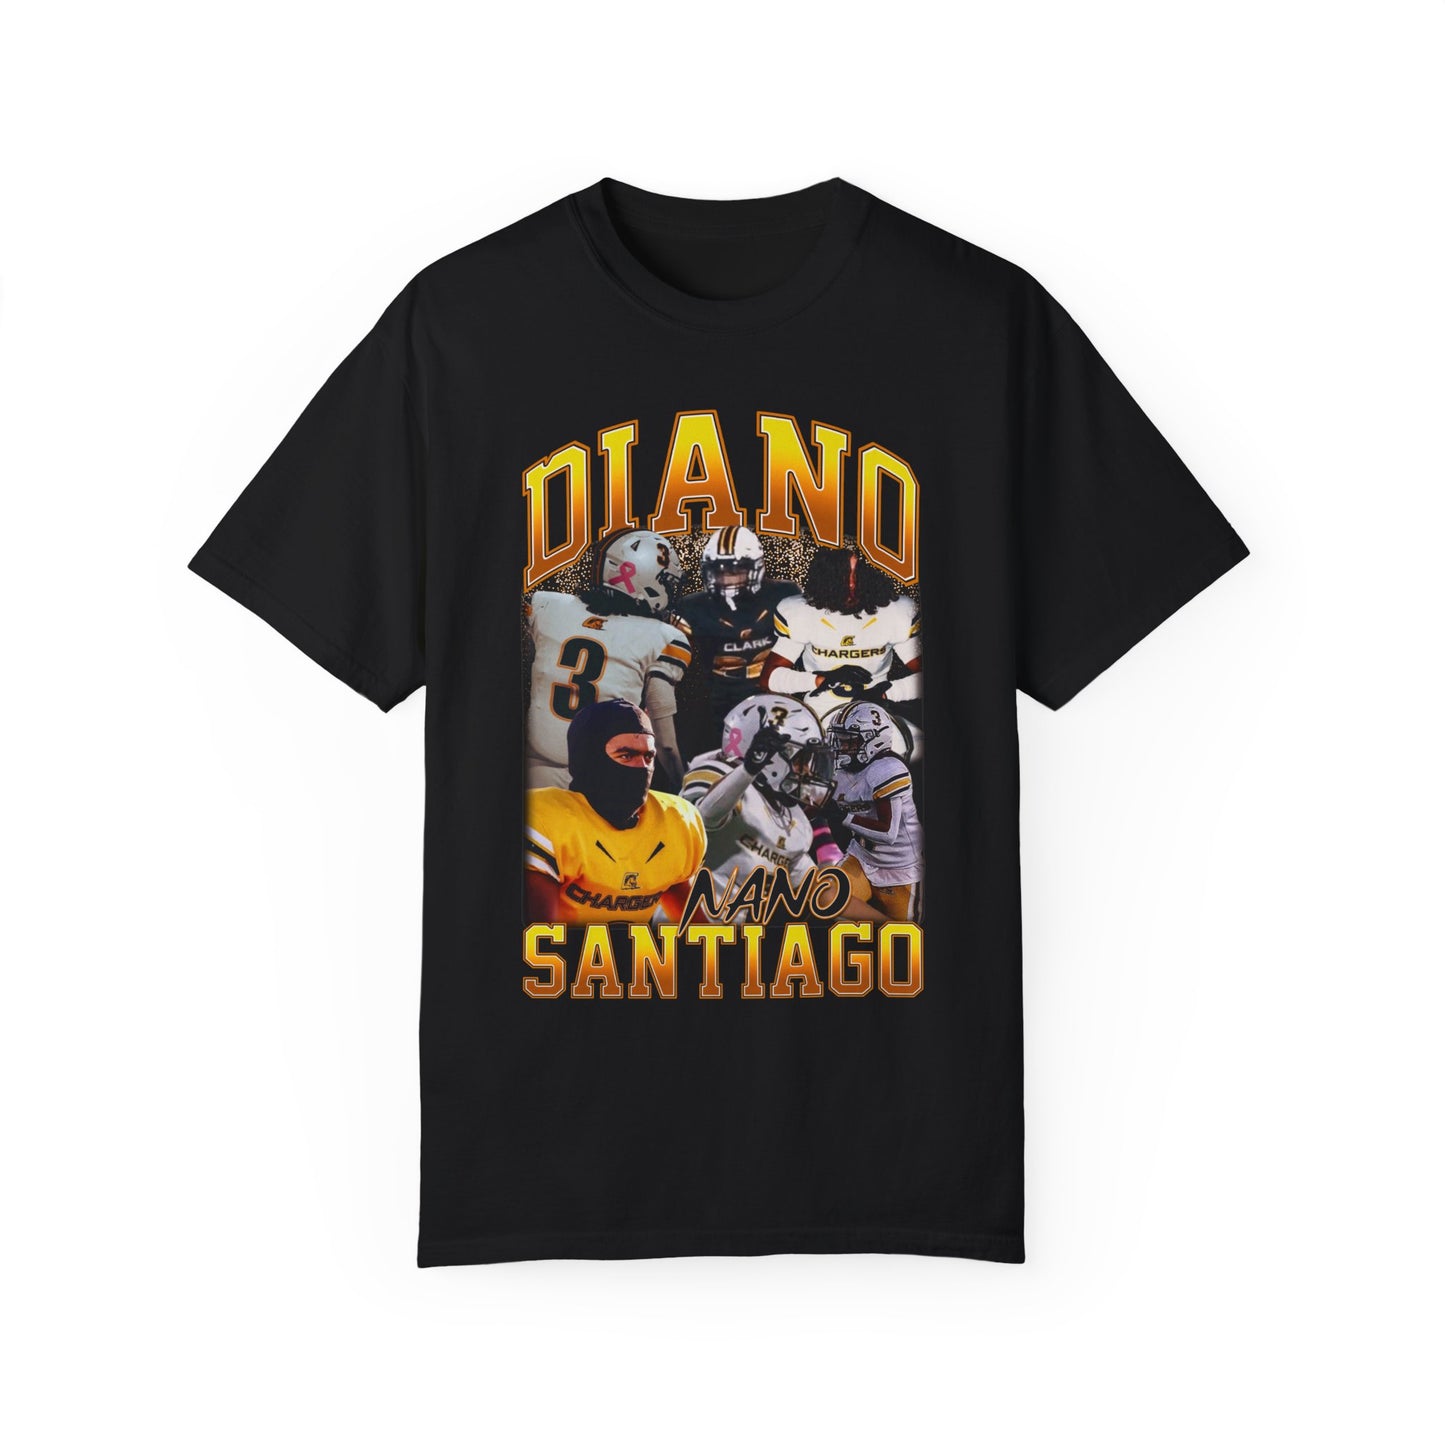 Diano Santiago Graphic T-shirt